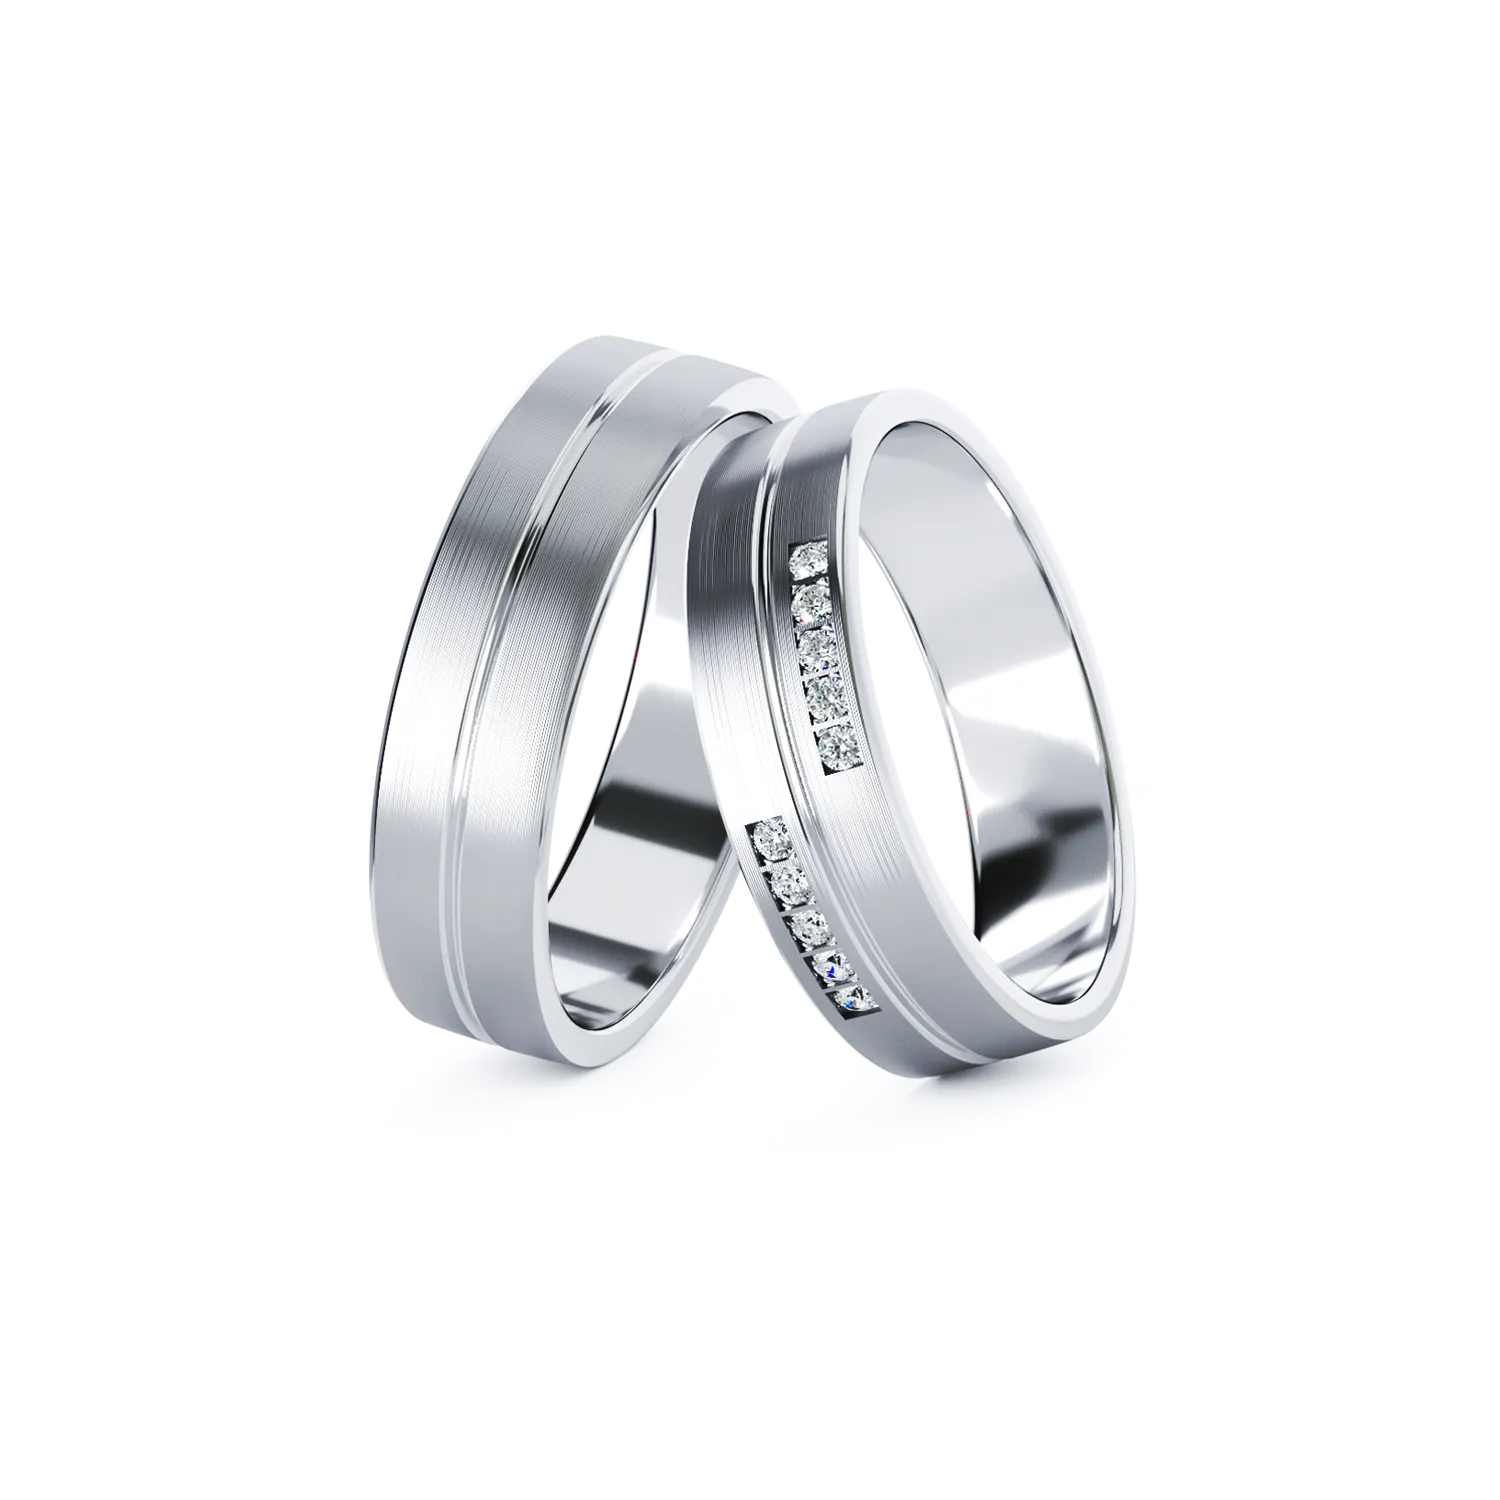 TEI-COCO gold wedding rings